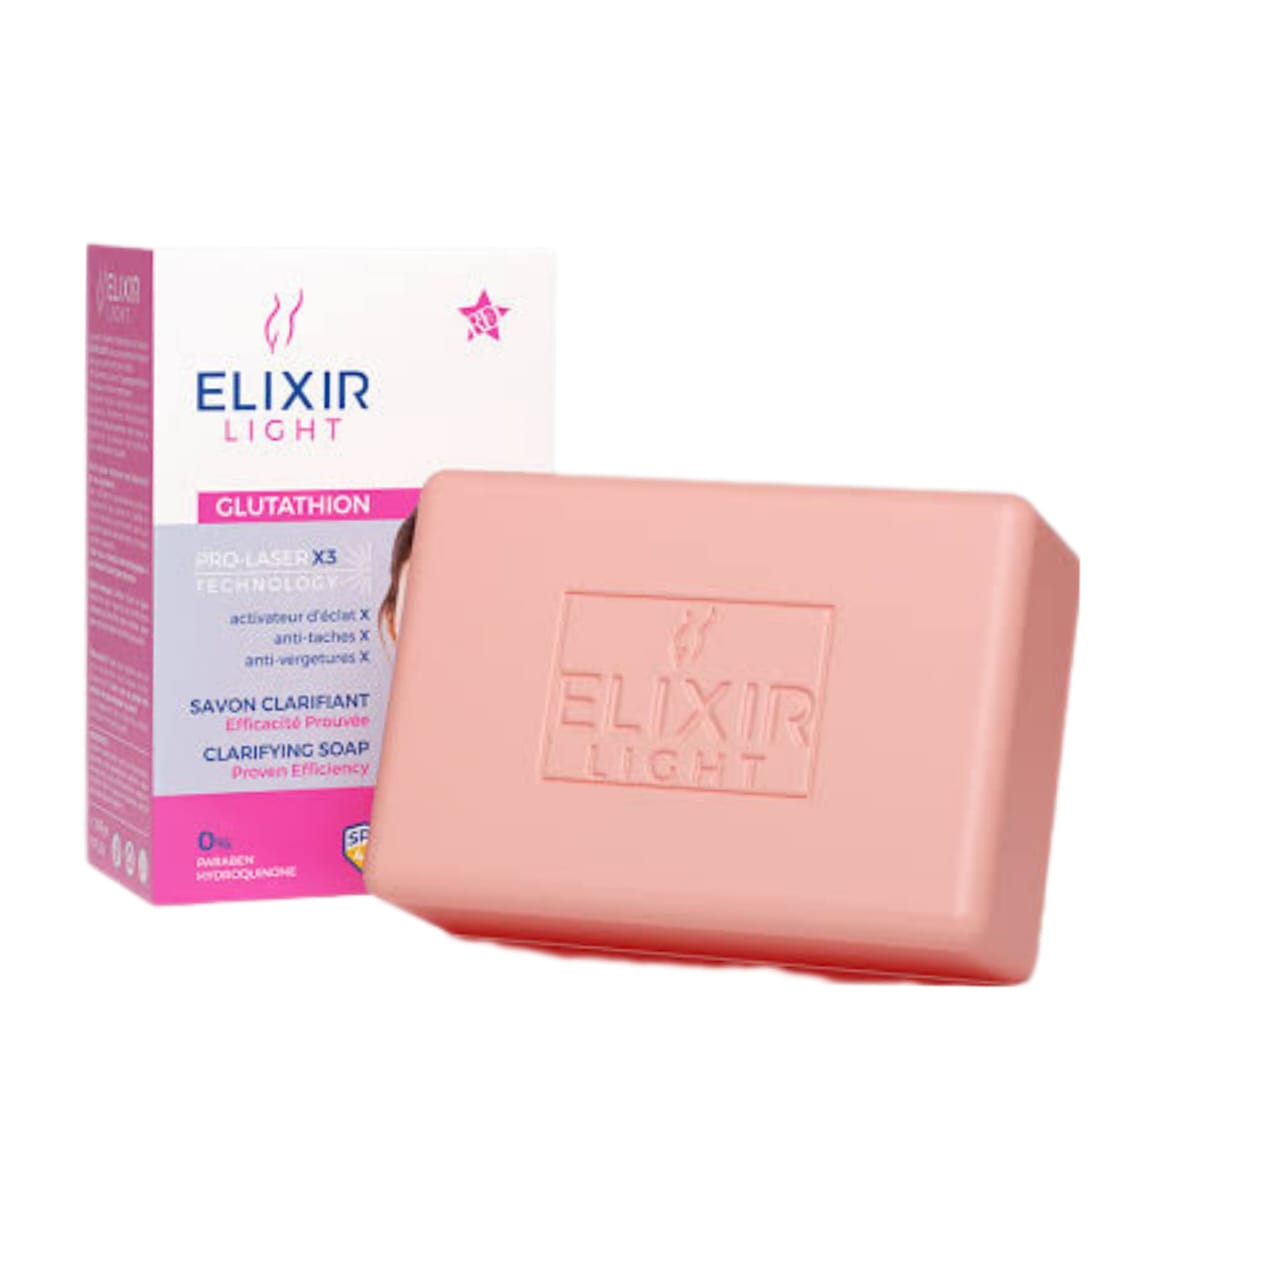 RD Elixir Light Glutathion Clarifying Soap